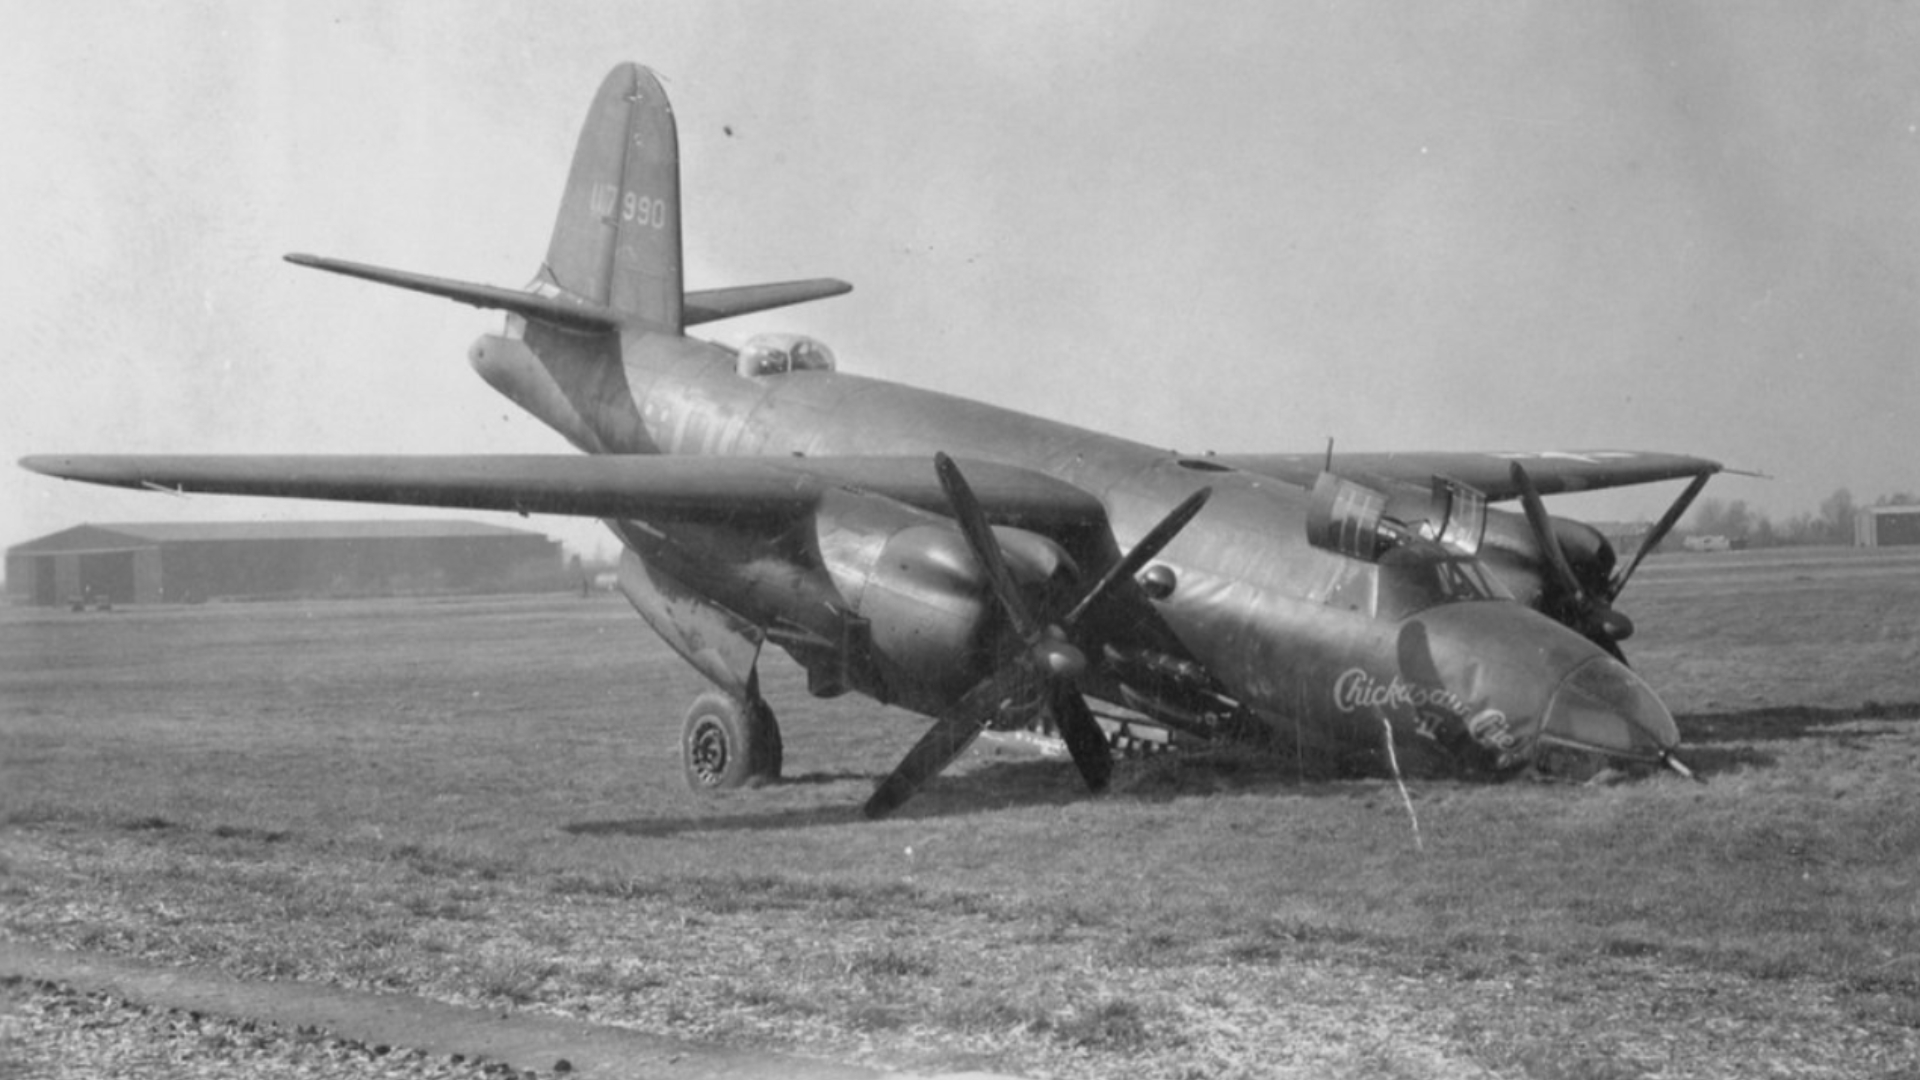 Martin B-26B Marauder #41-17990 nicknamed 